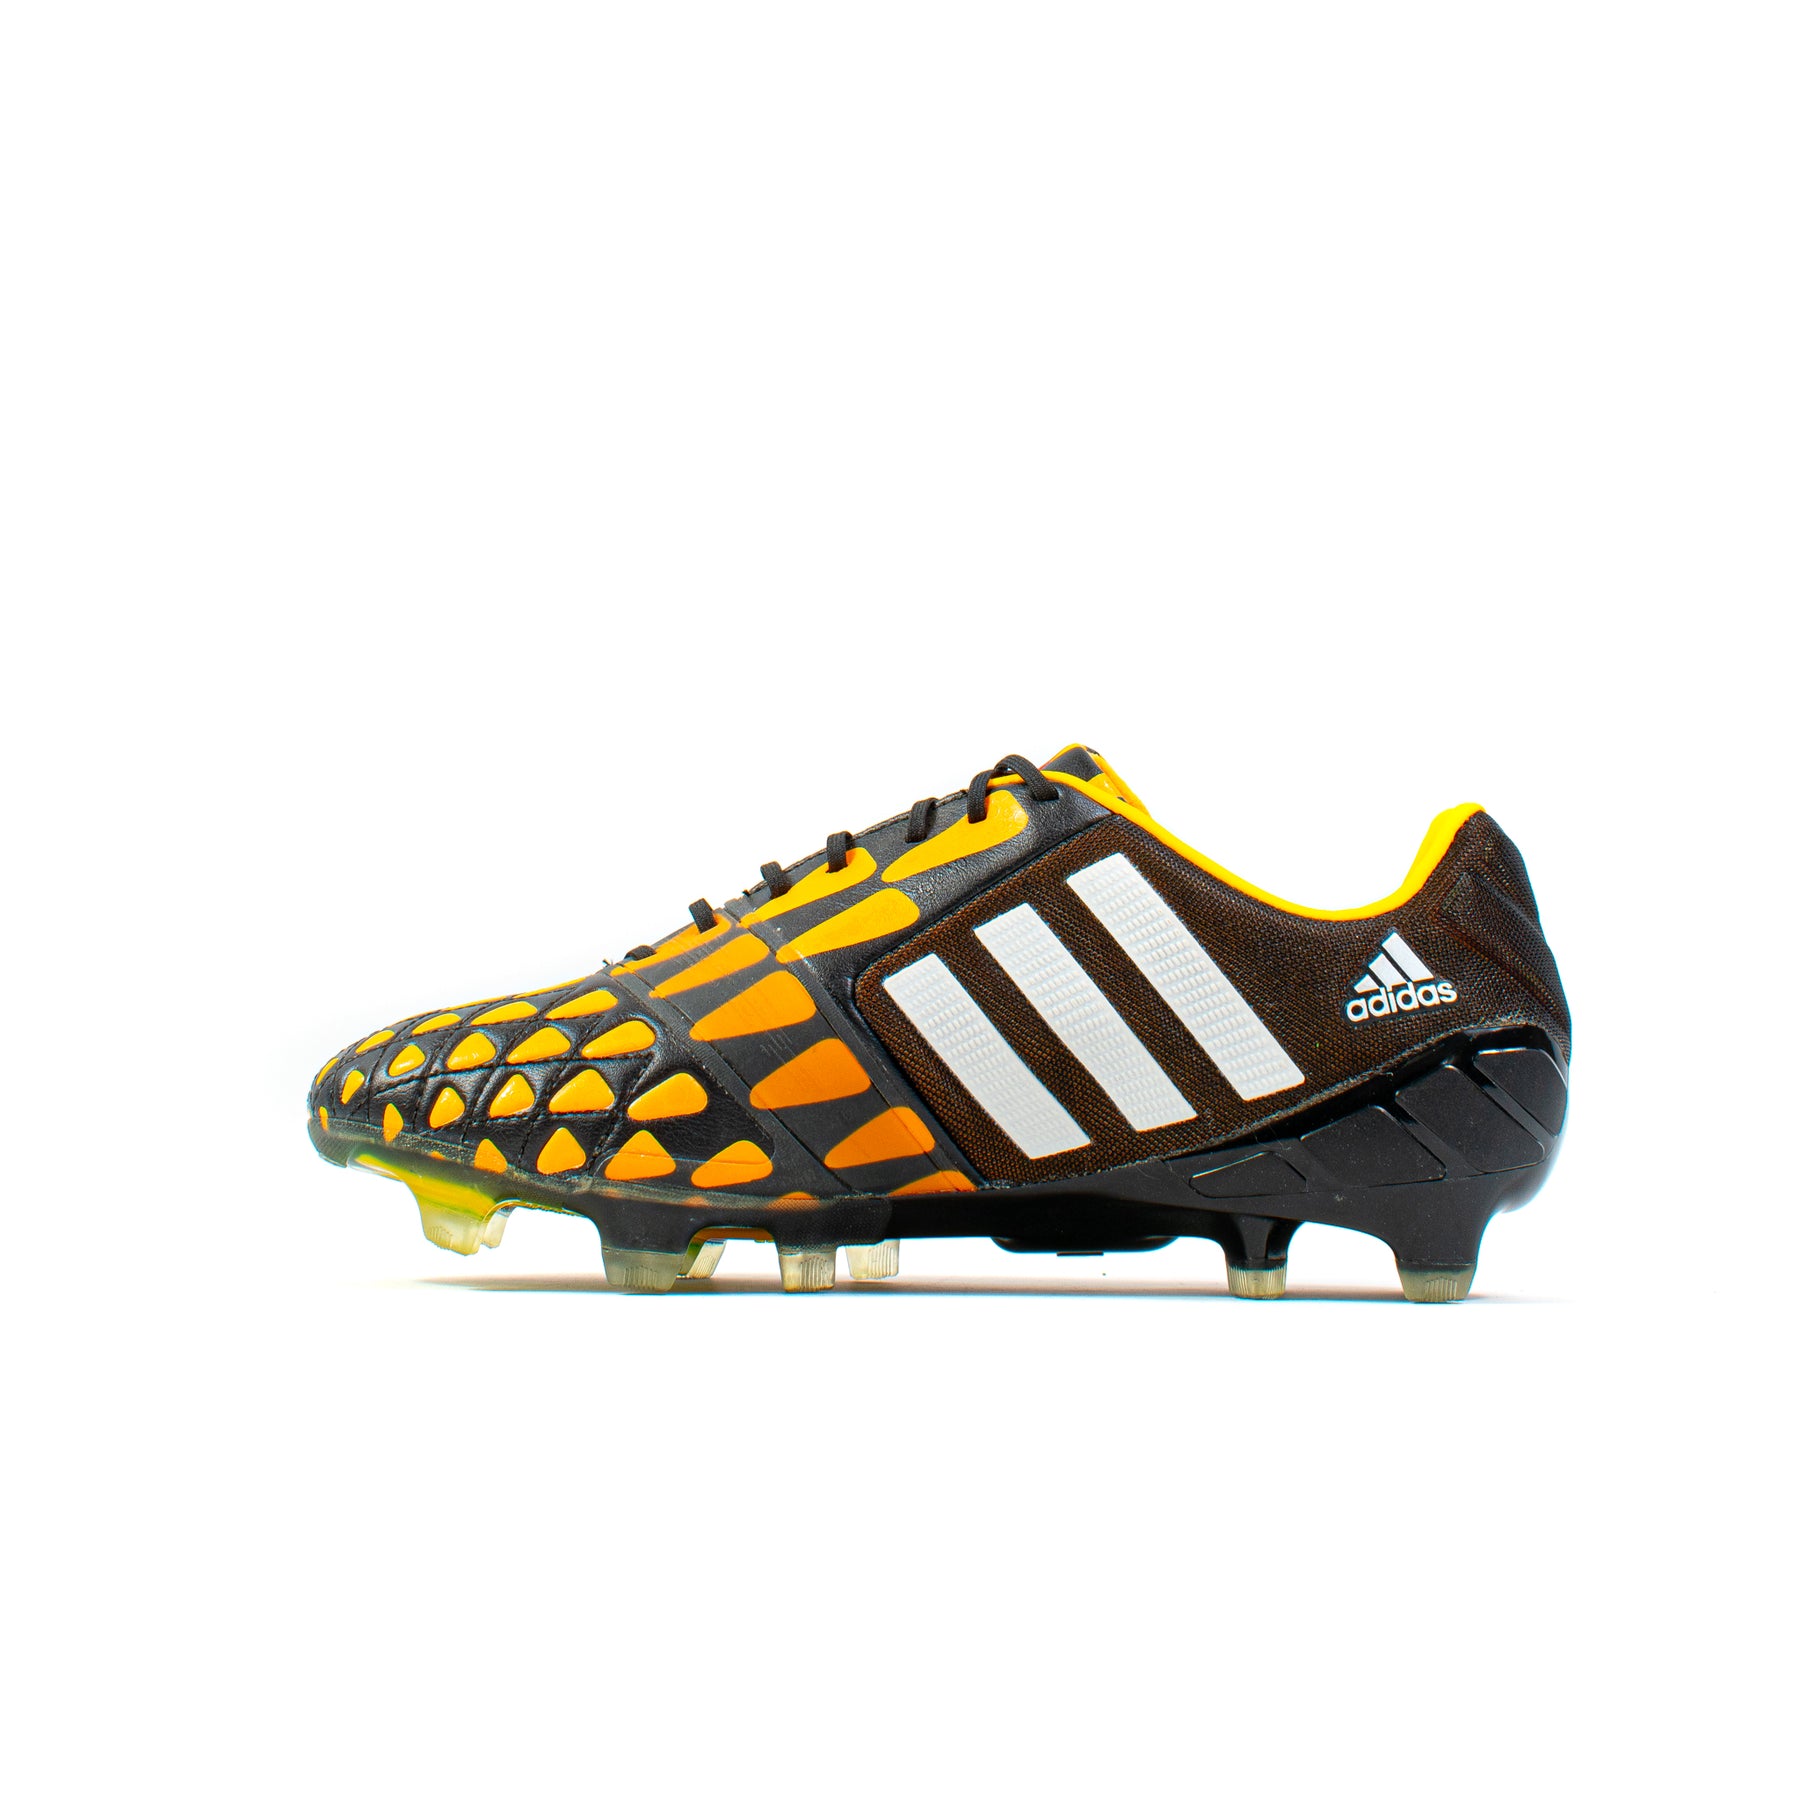 Adidas Nitrocharge 1.0 Black Gold FG – Classic Soccer Cleats